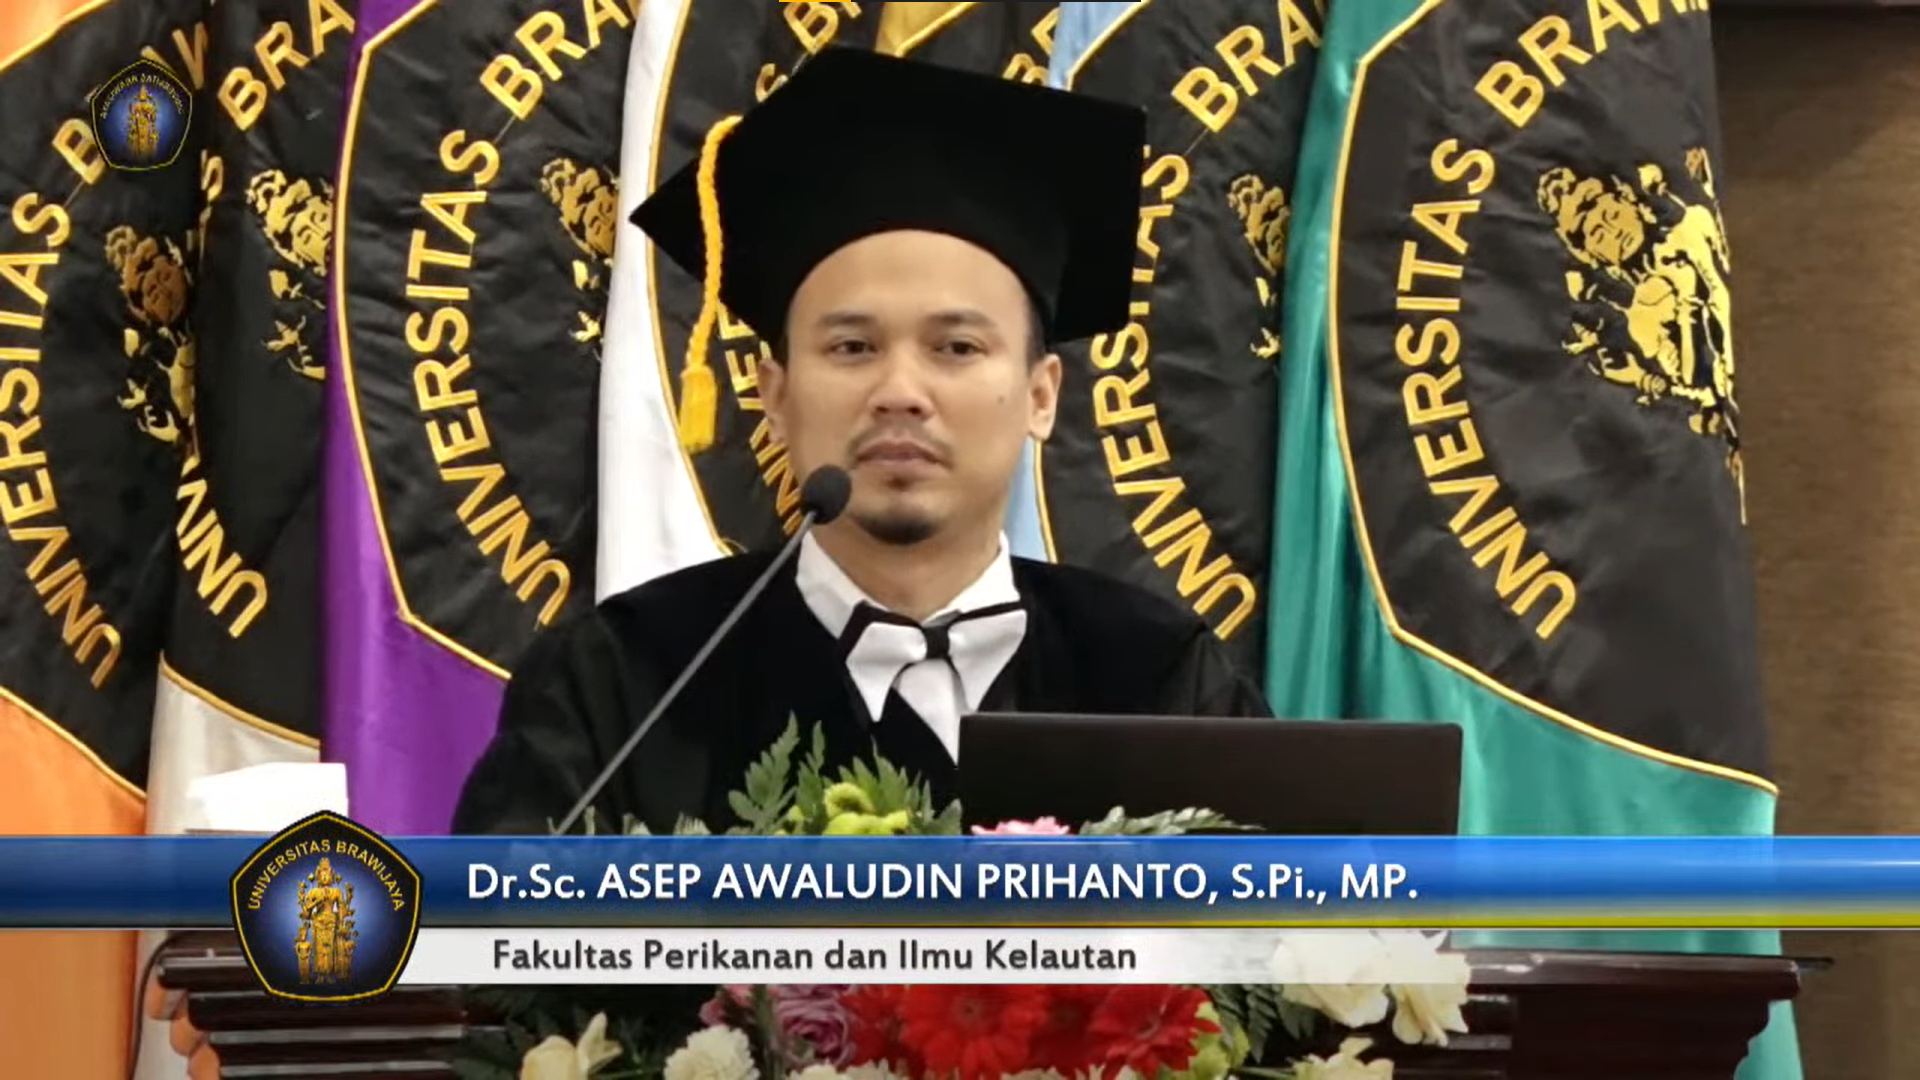 Pengukuhan Profesor Dr.Sc Asep Awaludin Prihanto